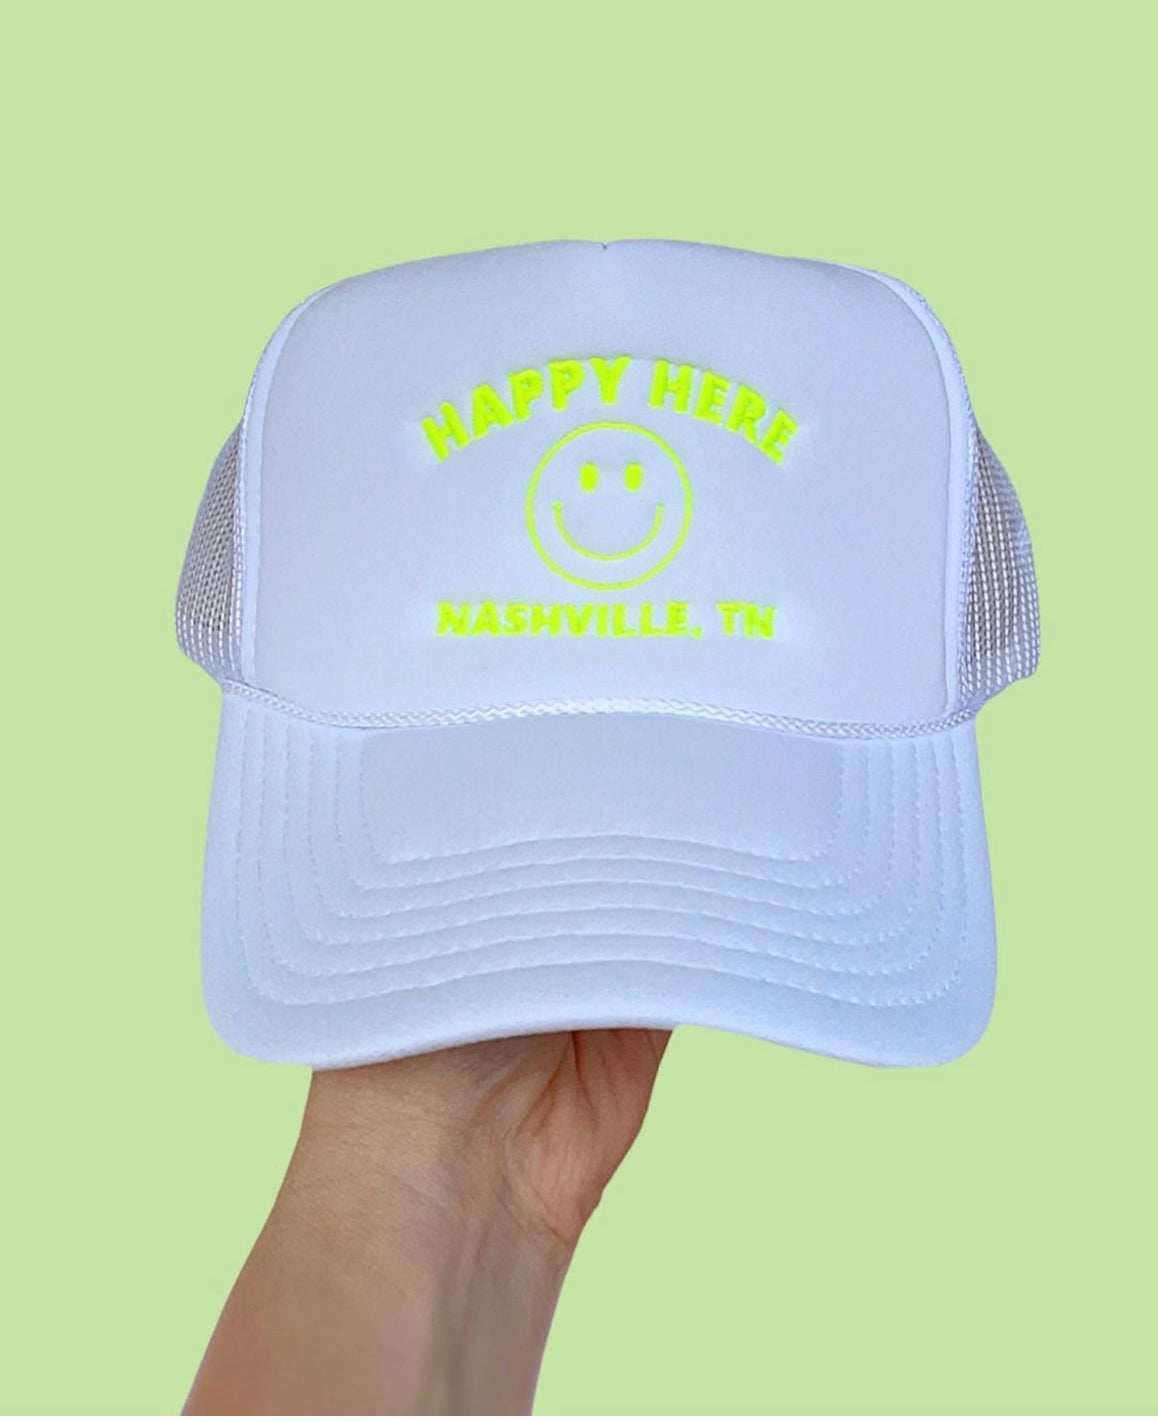 HAPPY HERE Nashville Trucker Hat (Various Color Options)